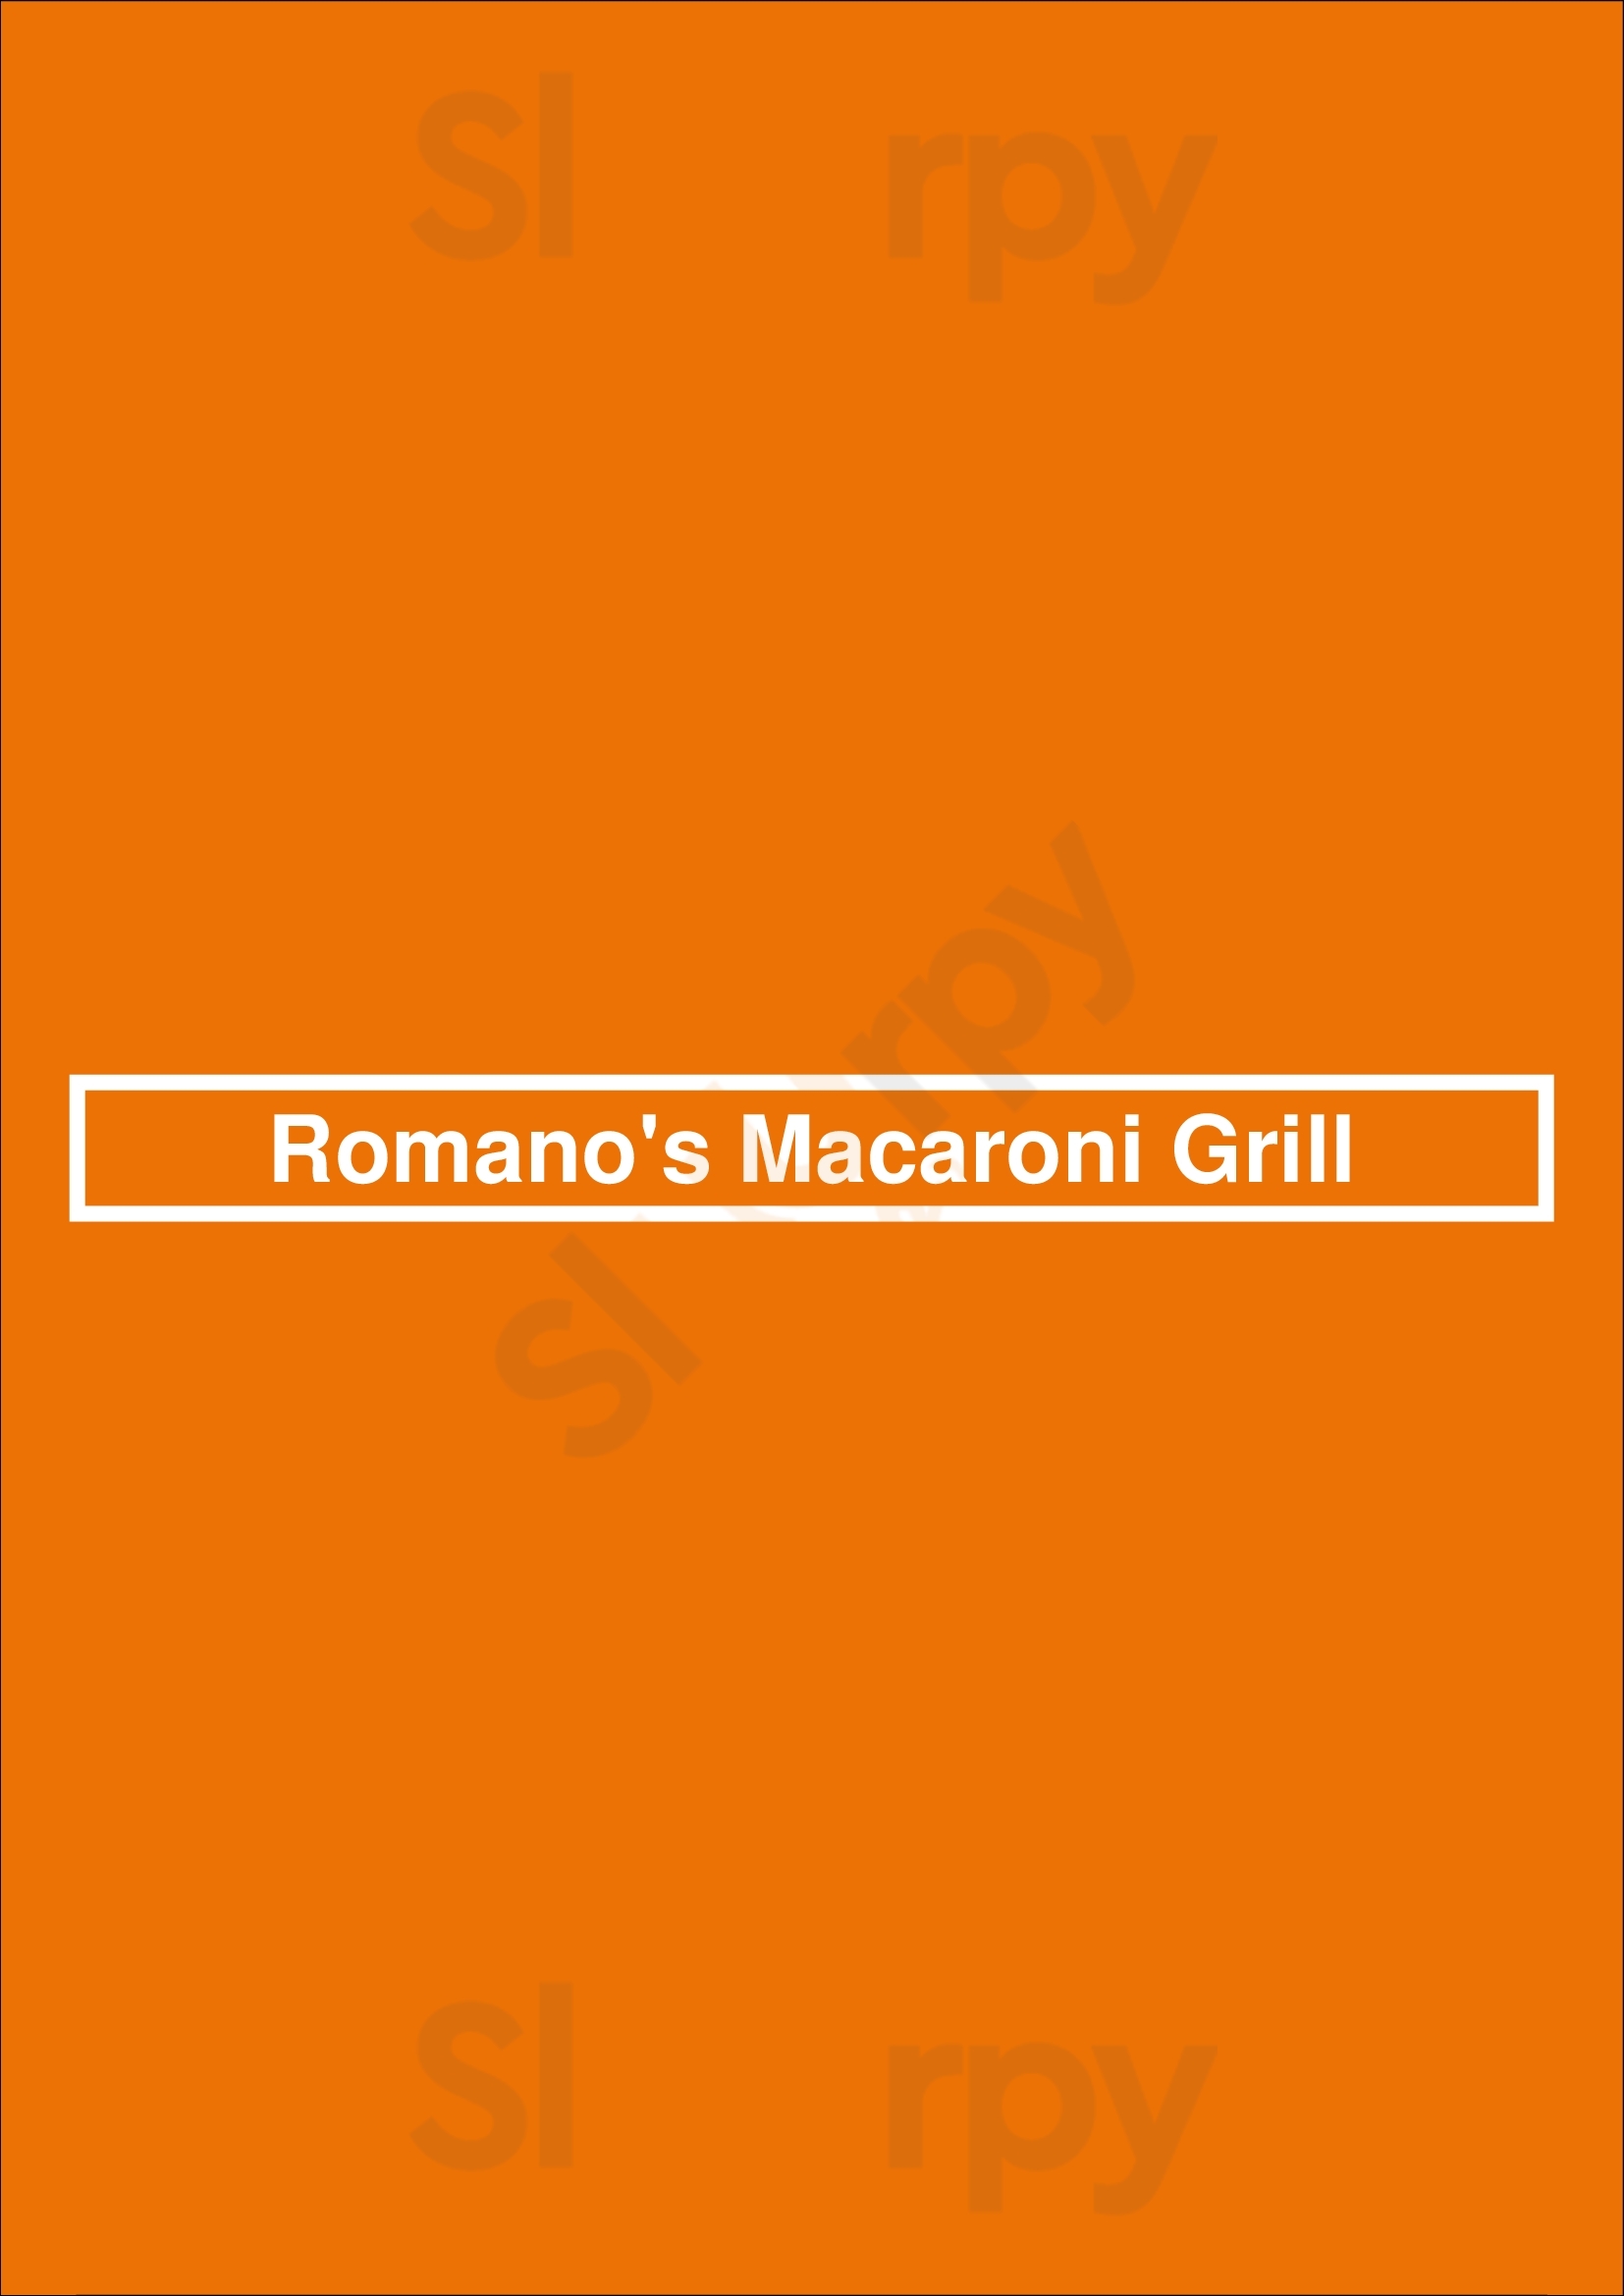 Romano's Macaroni Grill Plano Menu - 1